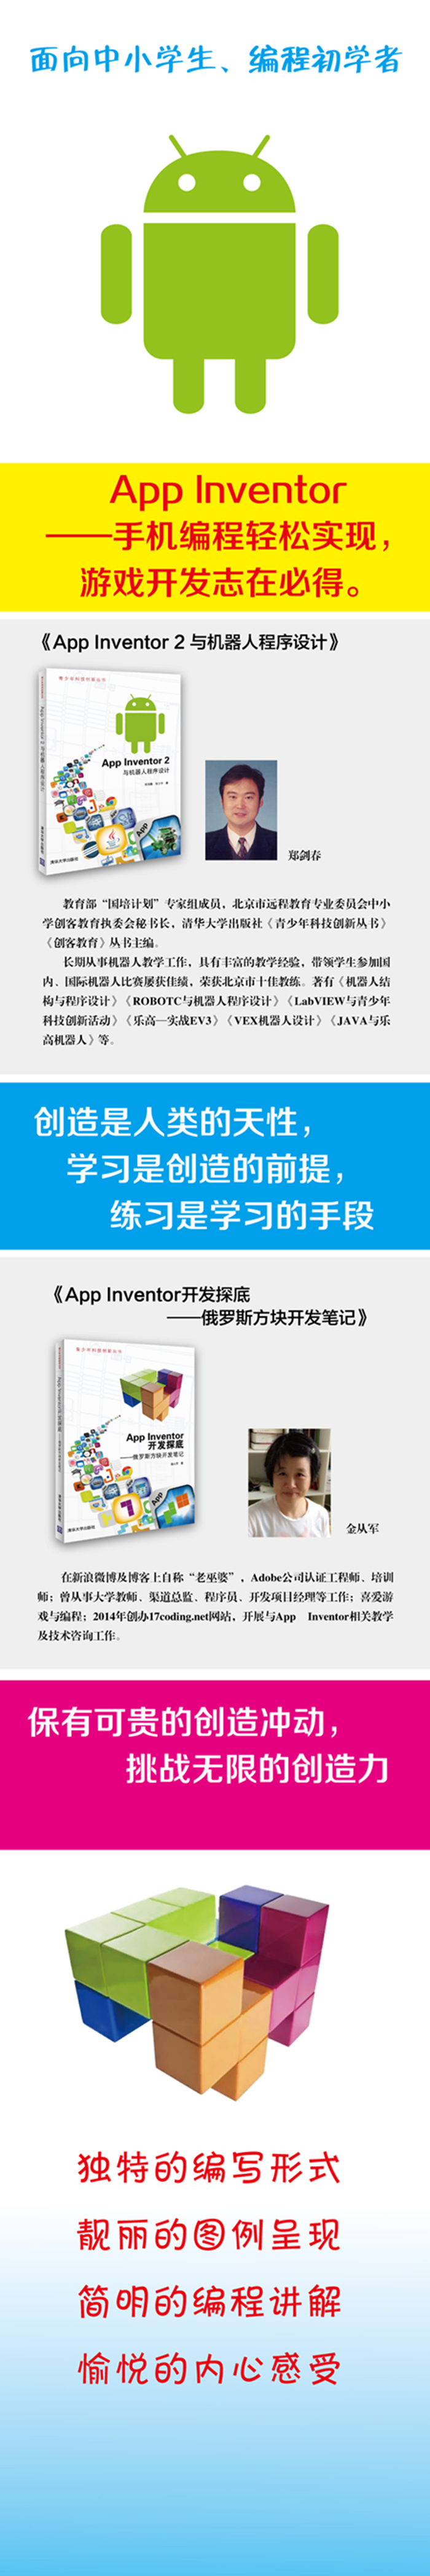 App Inventor 2 与机器人程序设计 郑剑春 张少华著 摘要书评在线阅读 苏宁易购图书